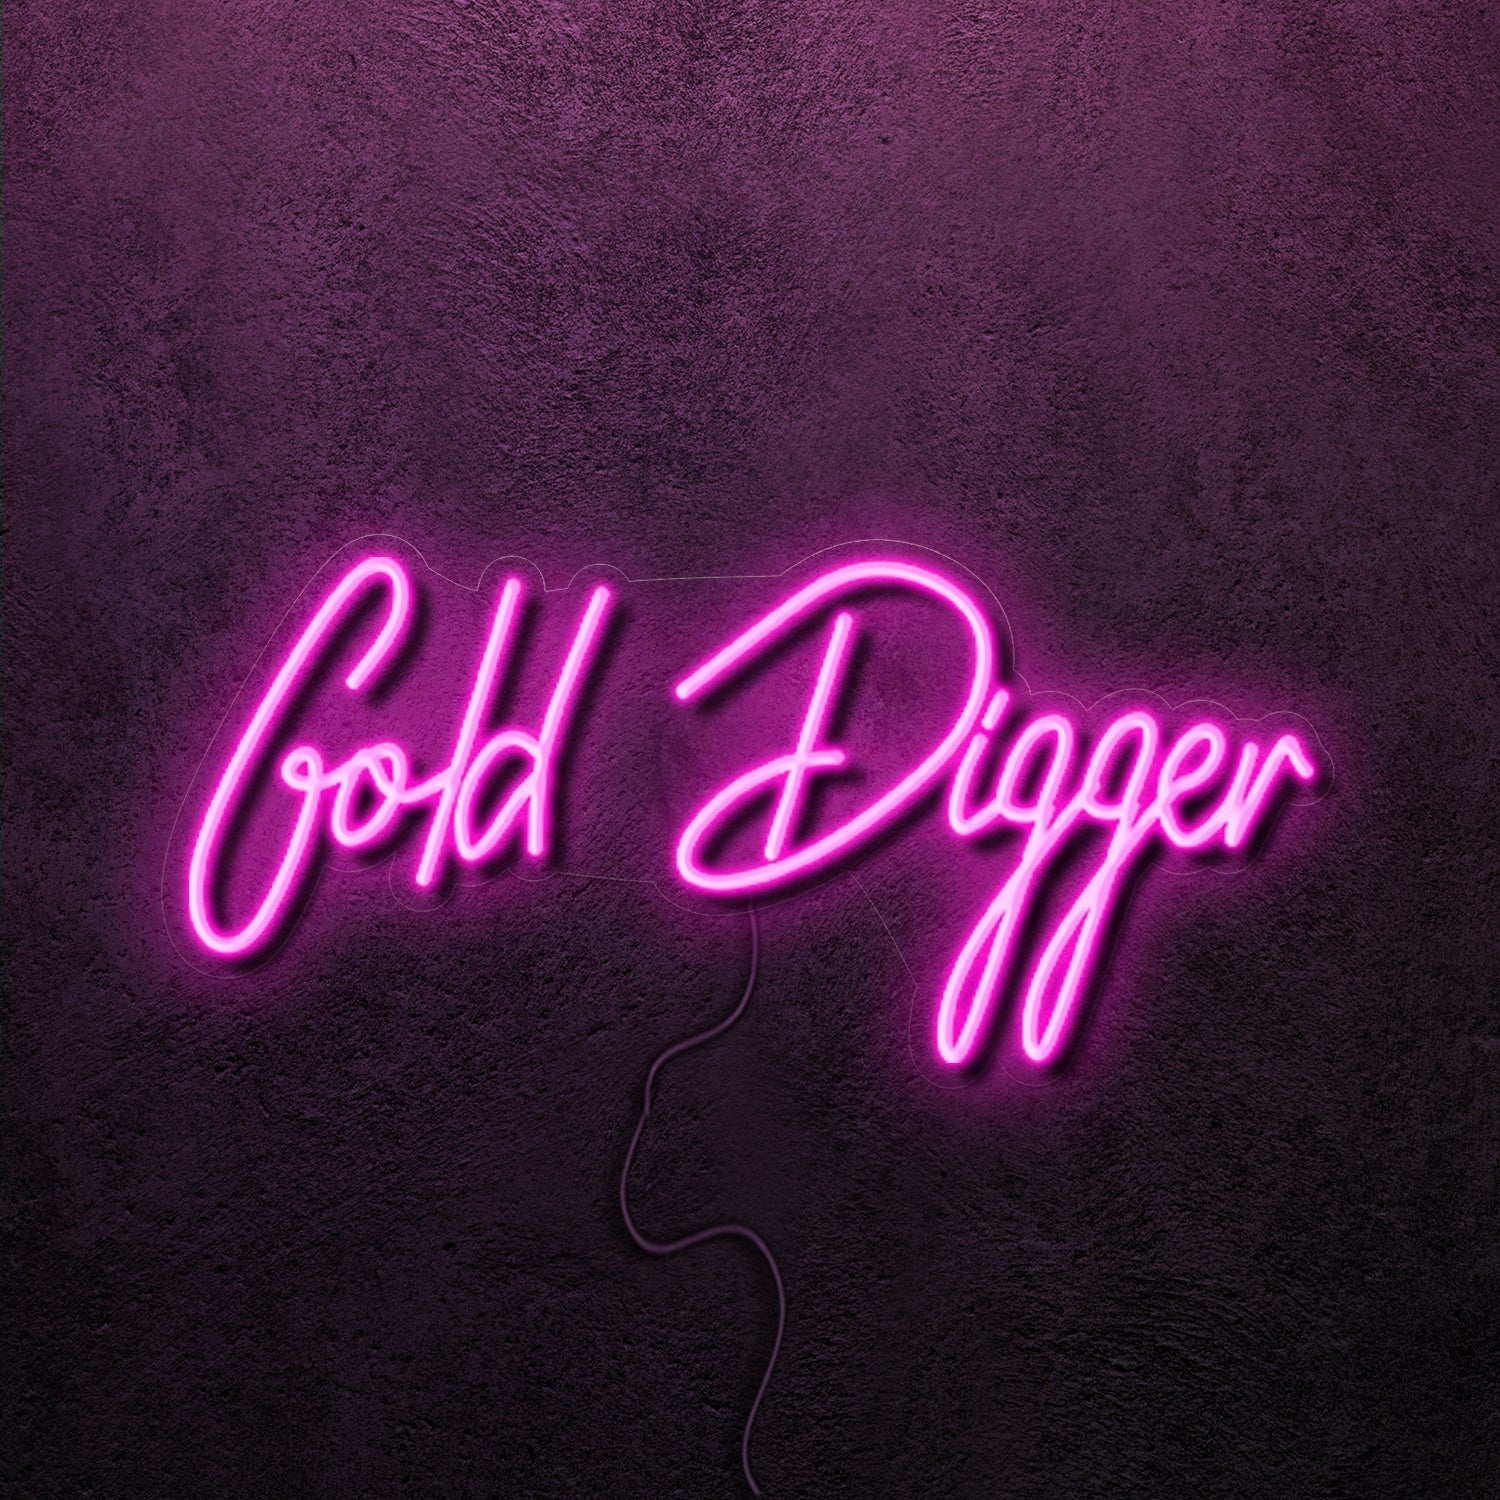 Gold Digger - neoon.eu